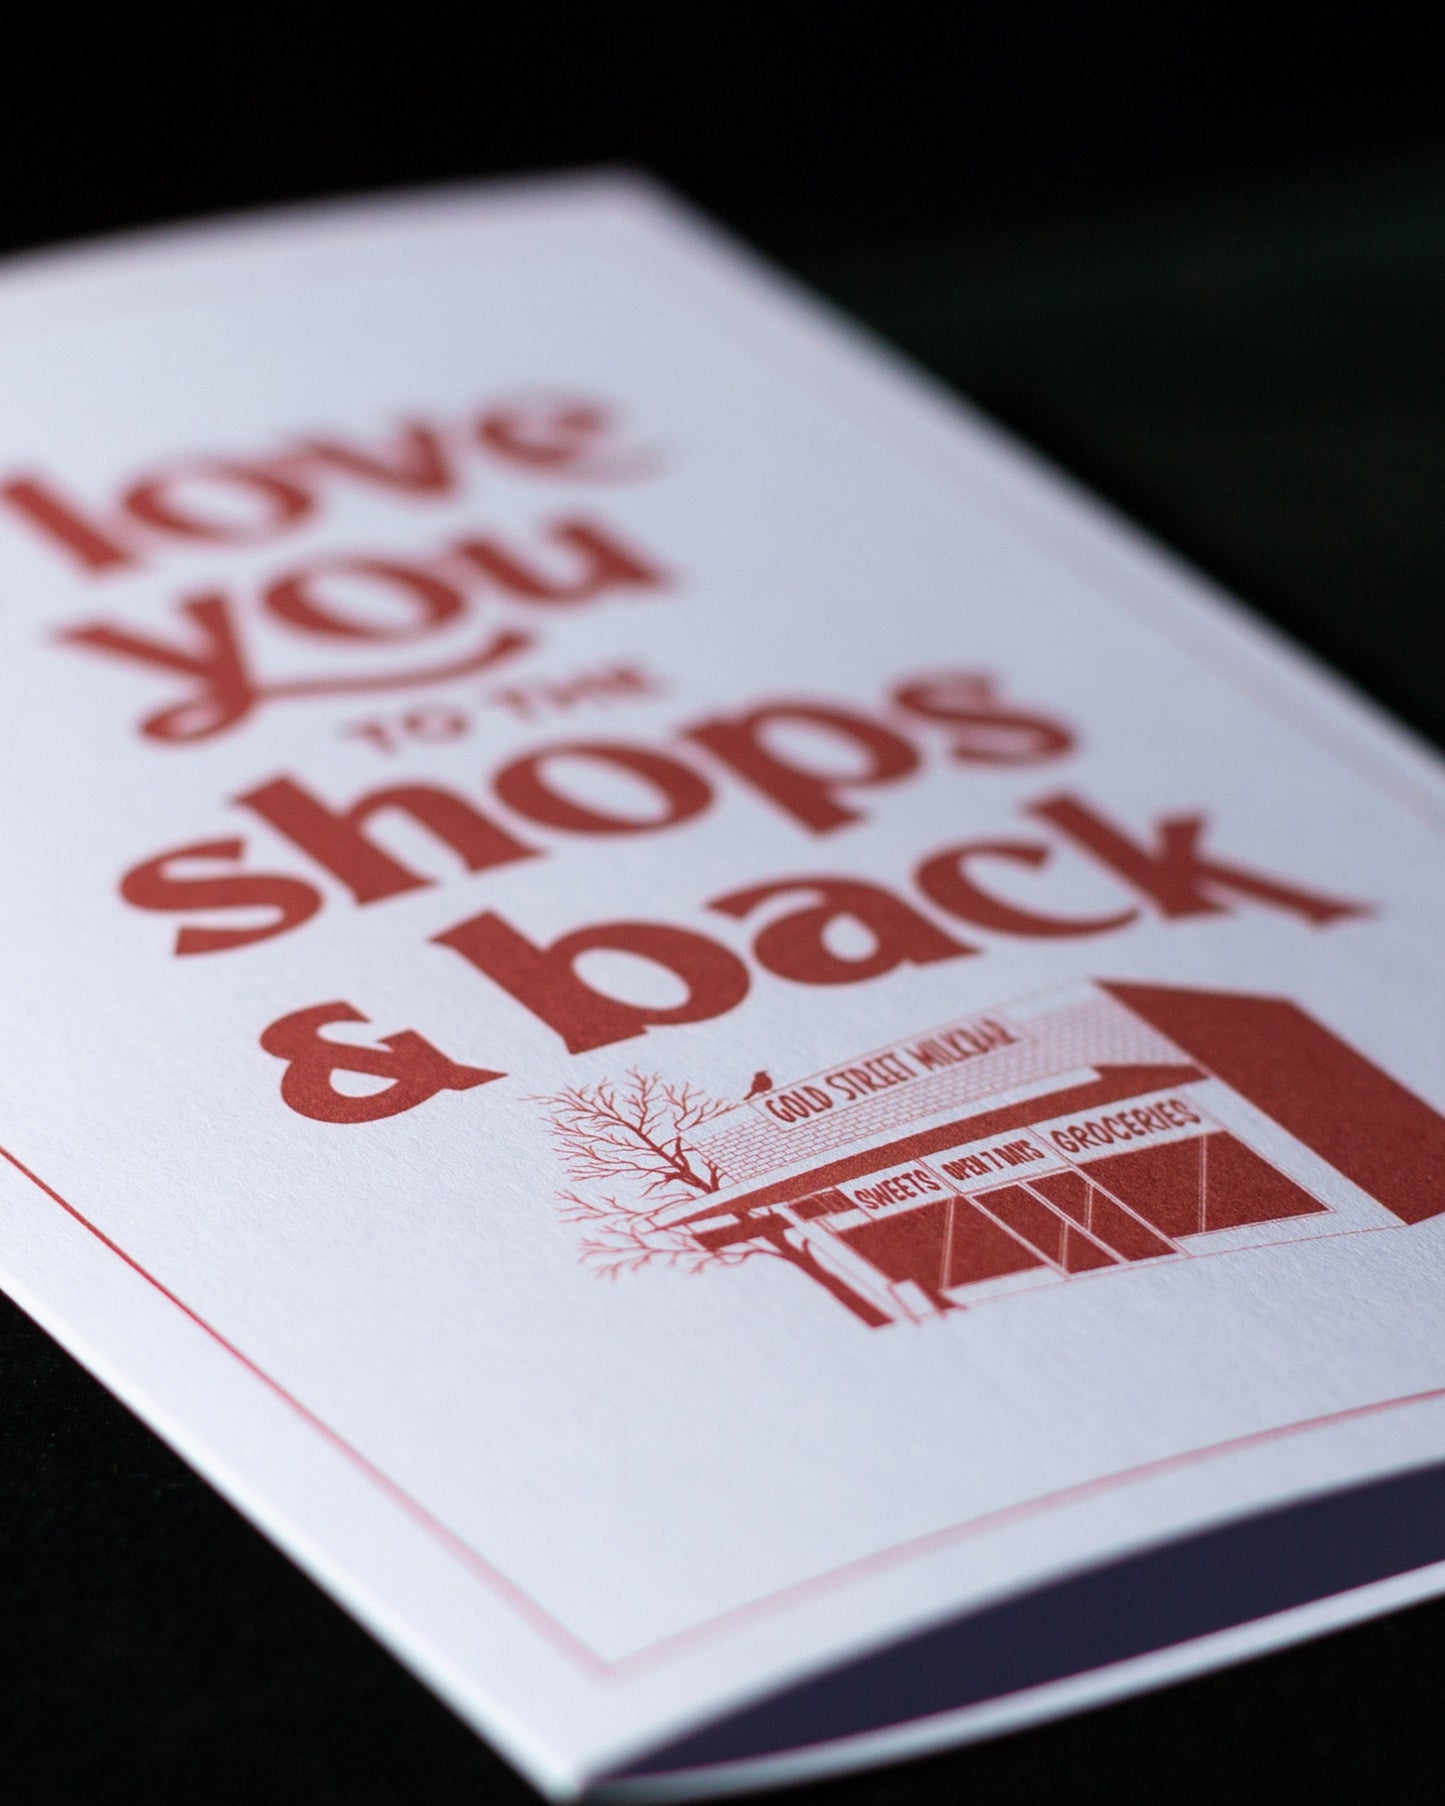 Shops & Back Greeting Card